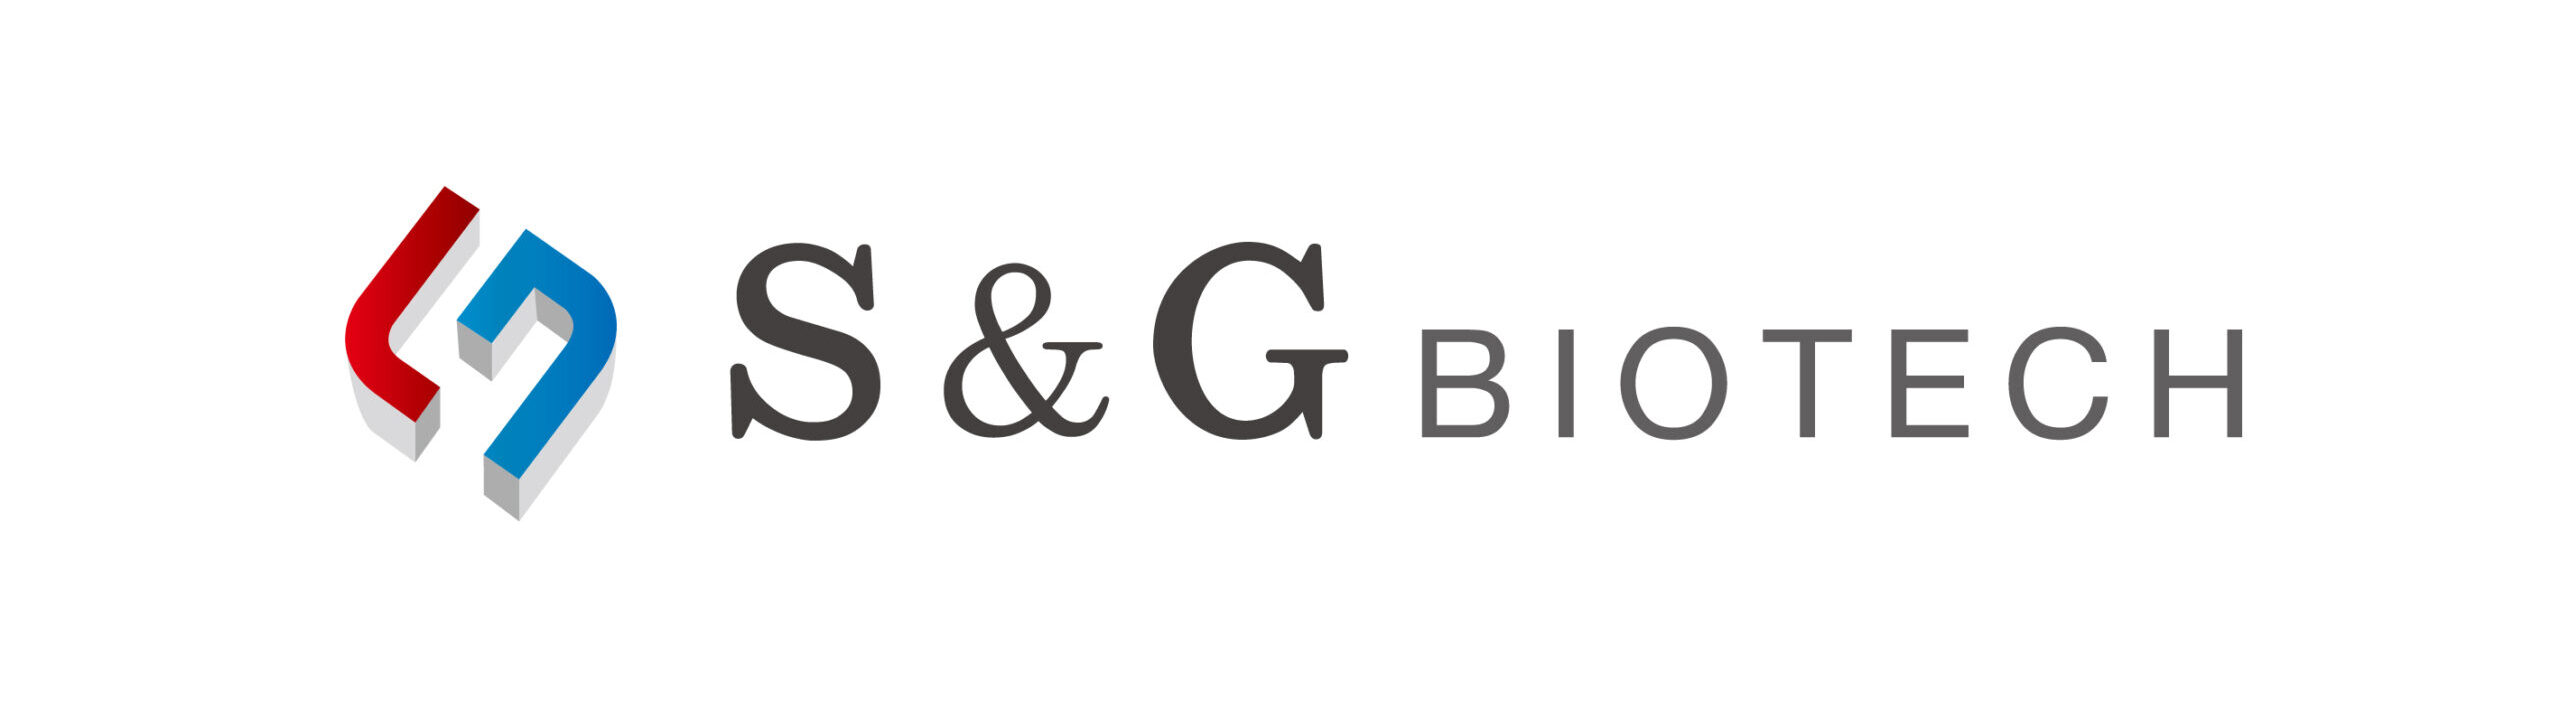 S & G Biotech Inc.